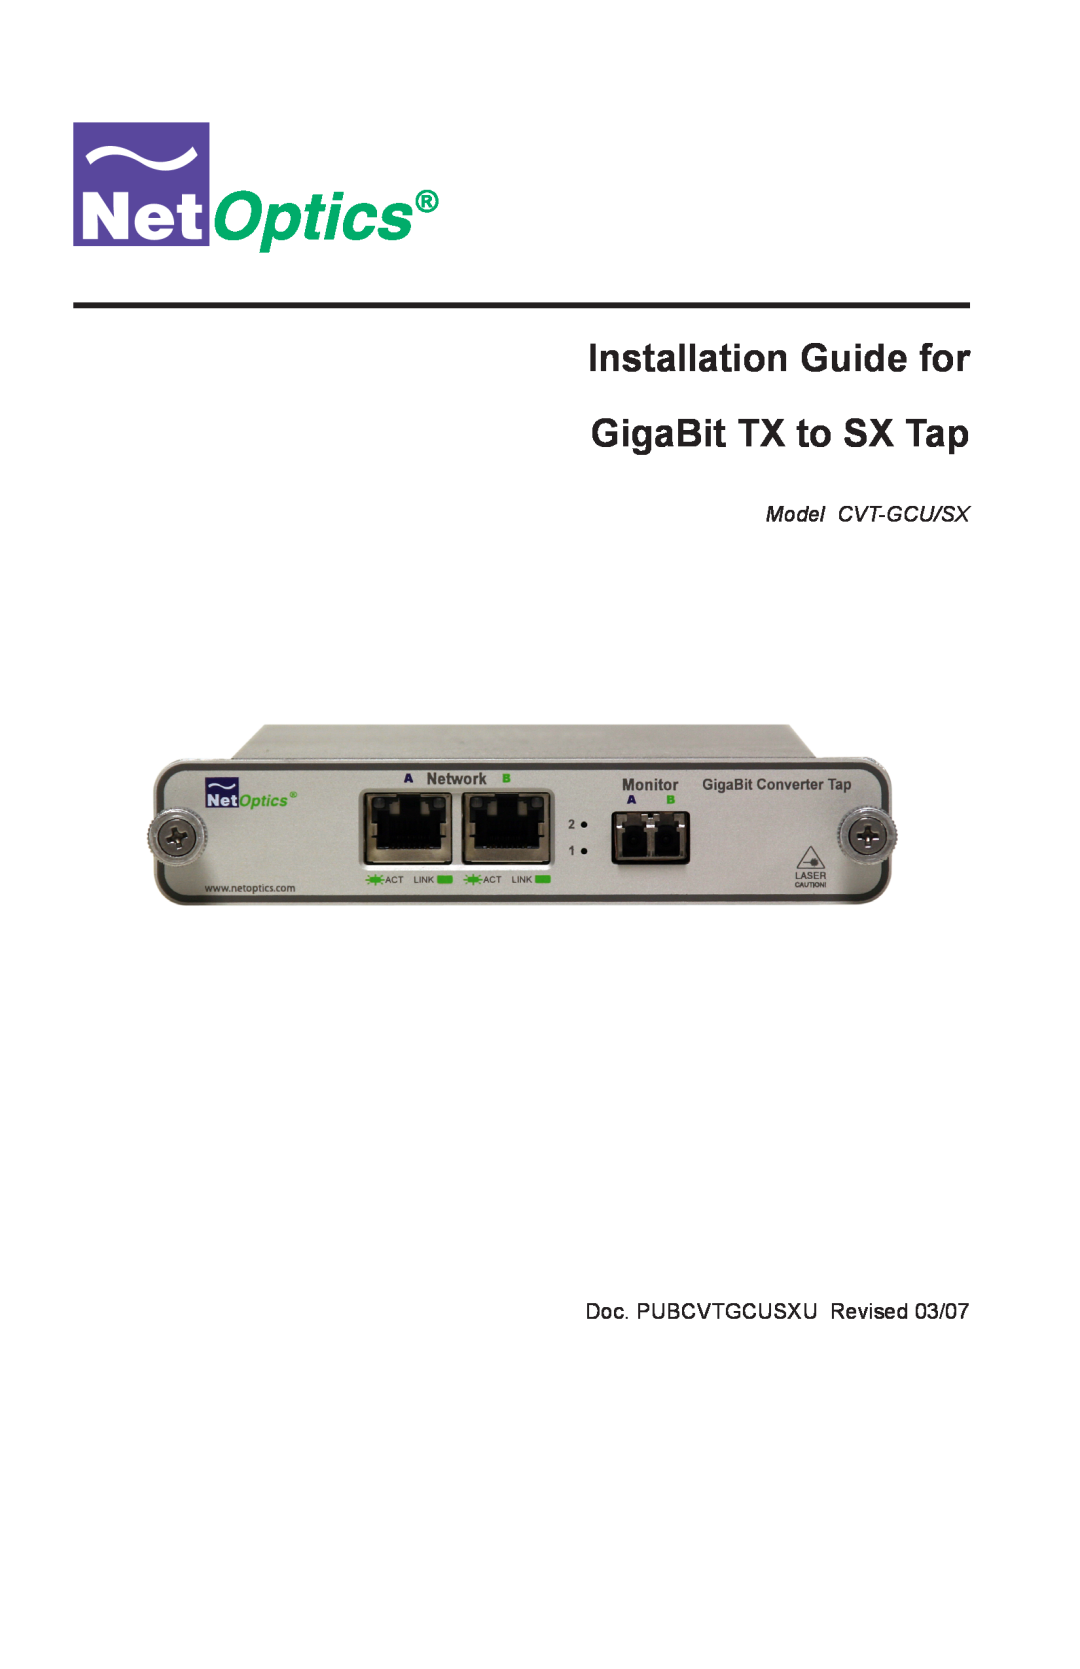 Nokia manual Installation Guide for GigaBit TX to SX Tap, Model CVT-GCU/SX, Doc. PUBCVTGCUSXU Revised 03/07 